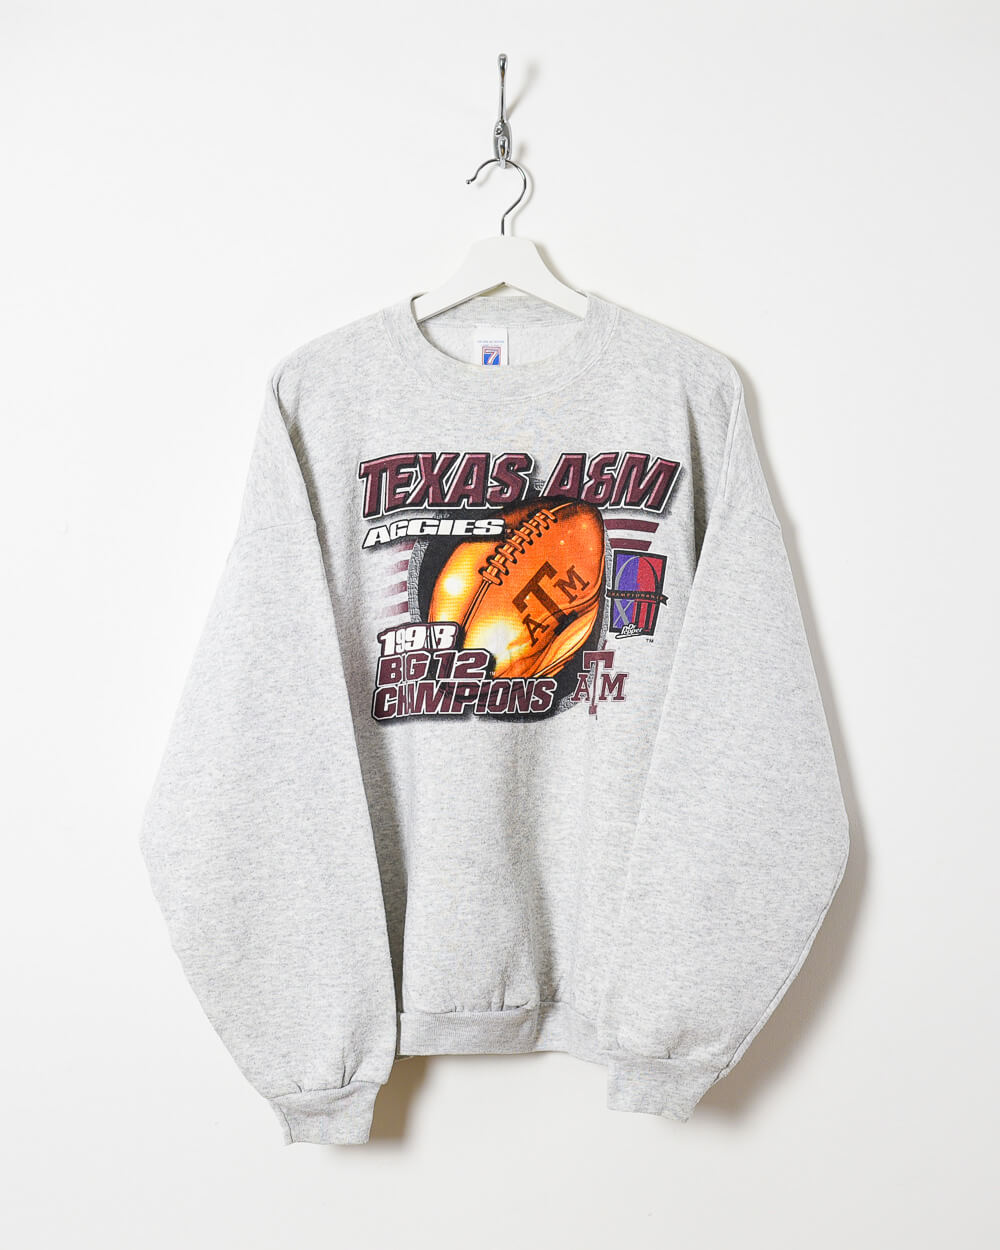 Stone Logo 7 Texas Asm Aggies Big12 1998 Champion Sweatshirt - Medium